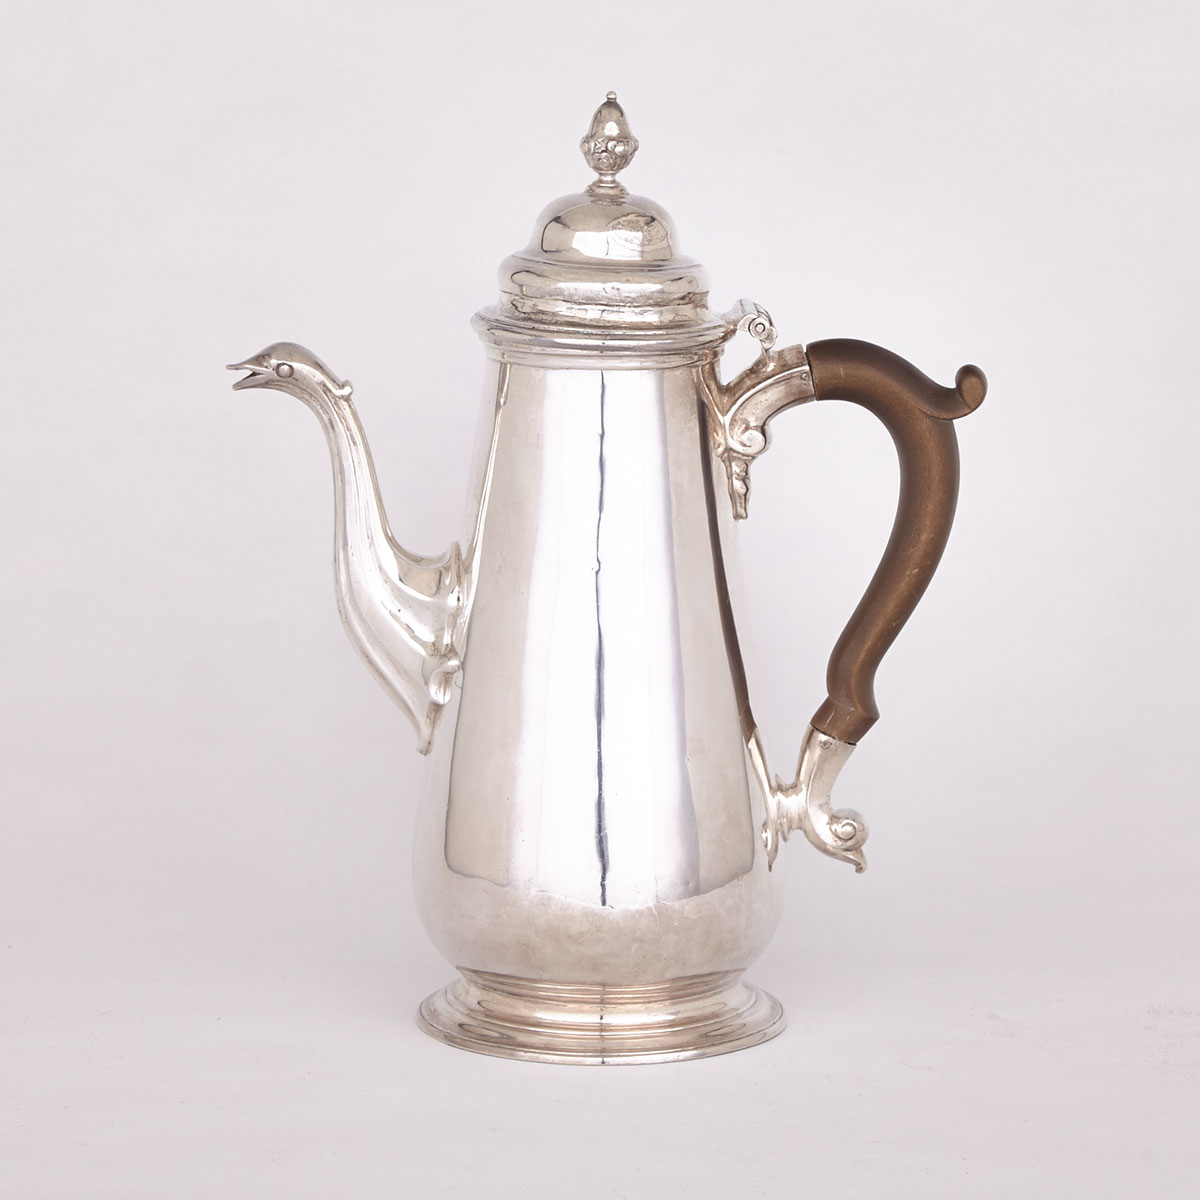 George II Silver Coffee Pot, Thomas Whipham, London, 1749